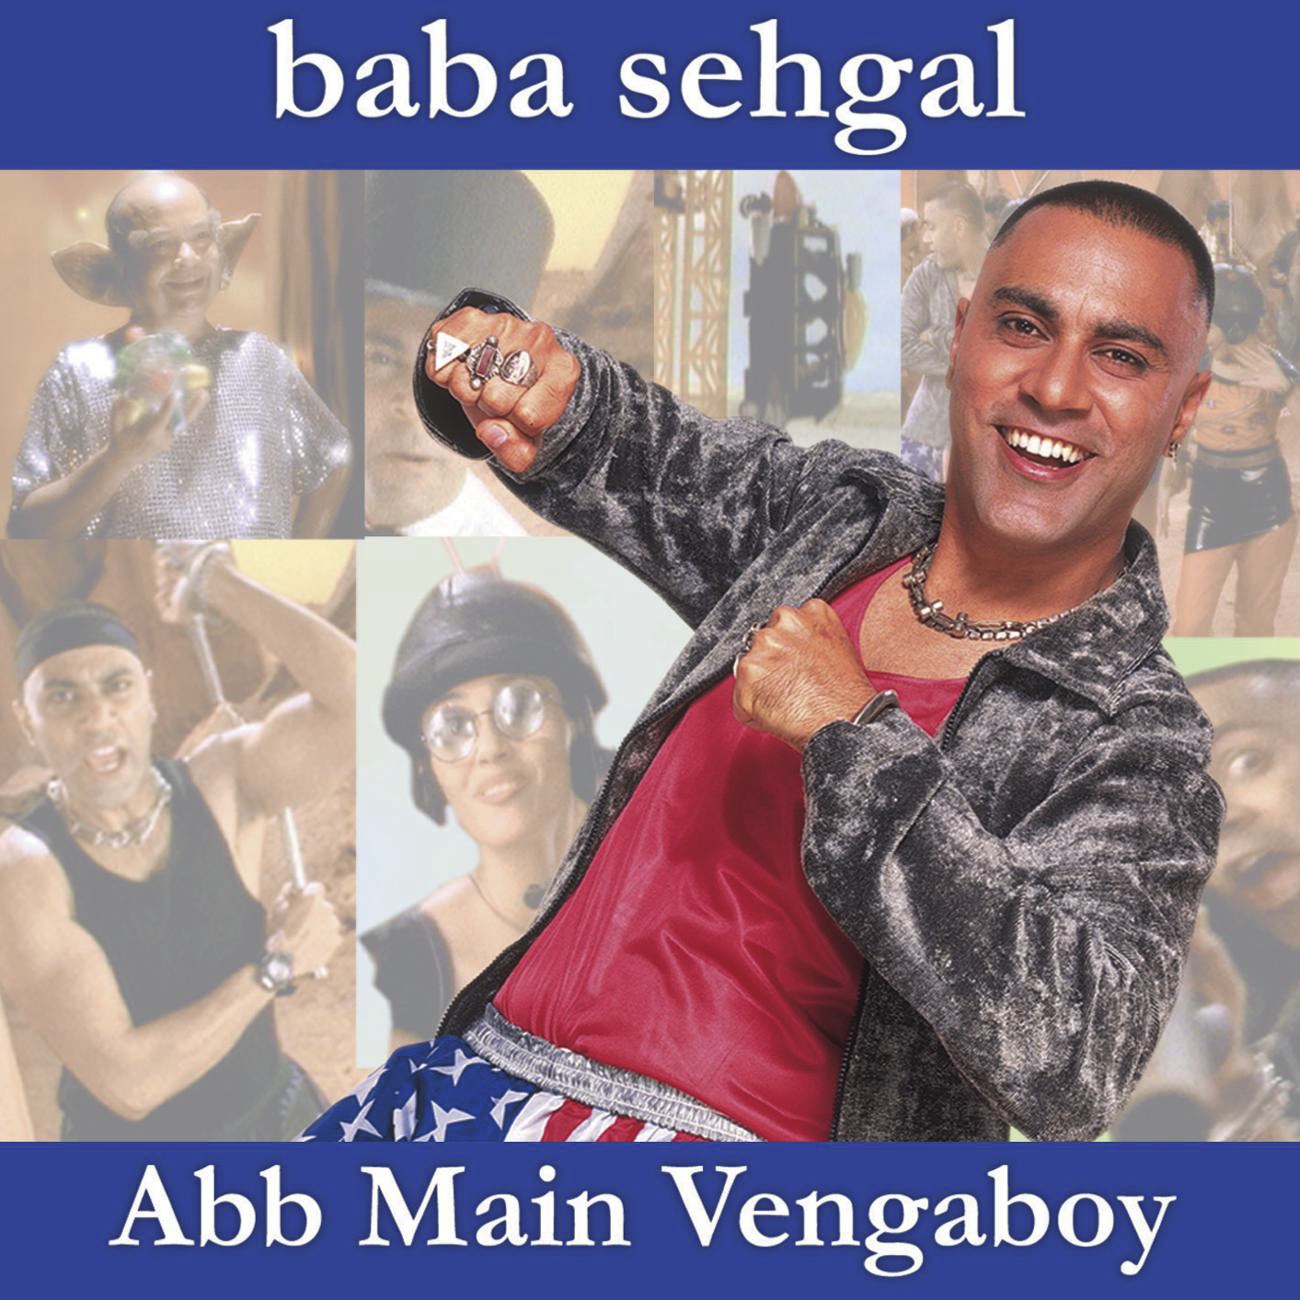 Abb Main Vengaboy